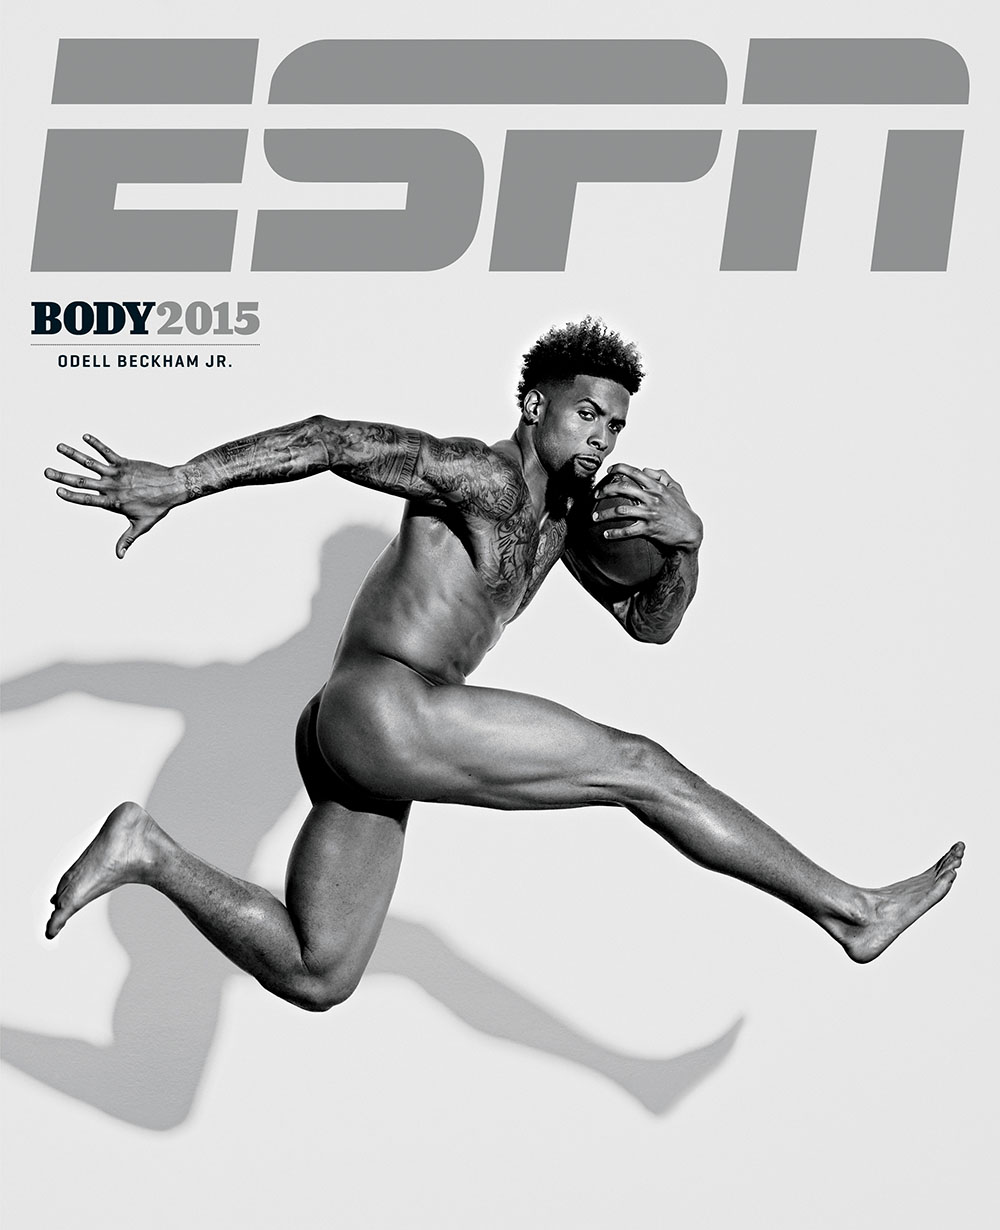 Photography News - Splendidi nudi sportivi di ESPN Odell Beckham Jr. fotografati da Carlos Serrao